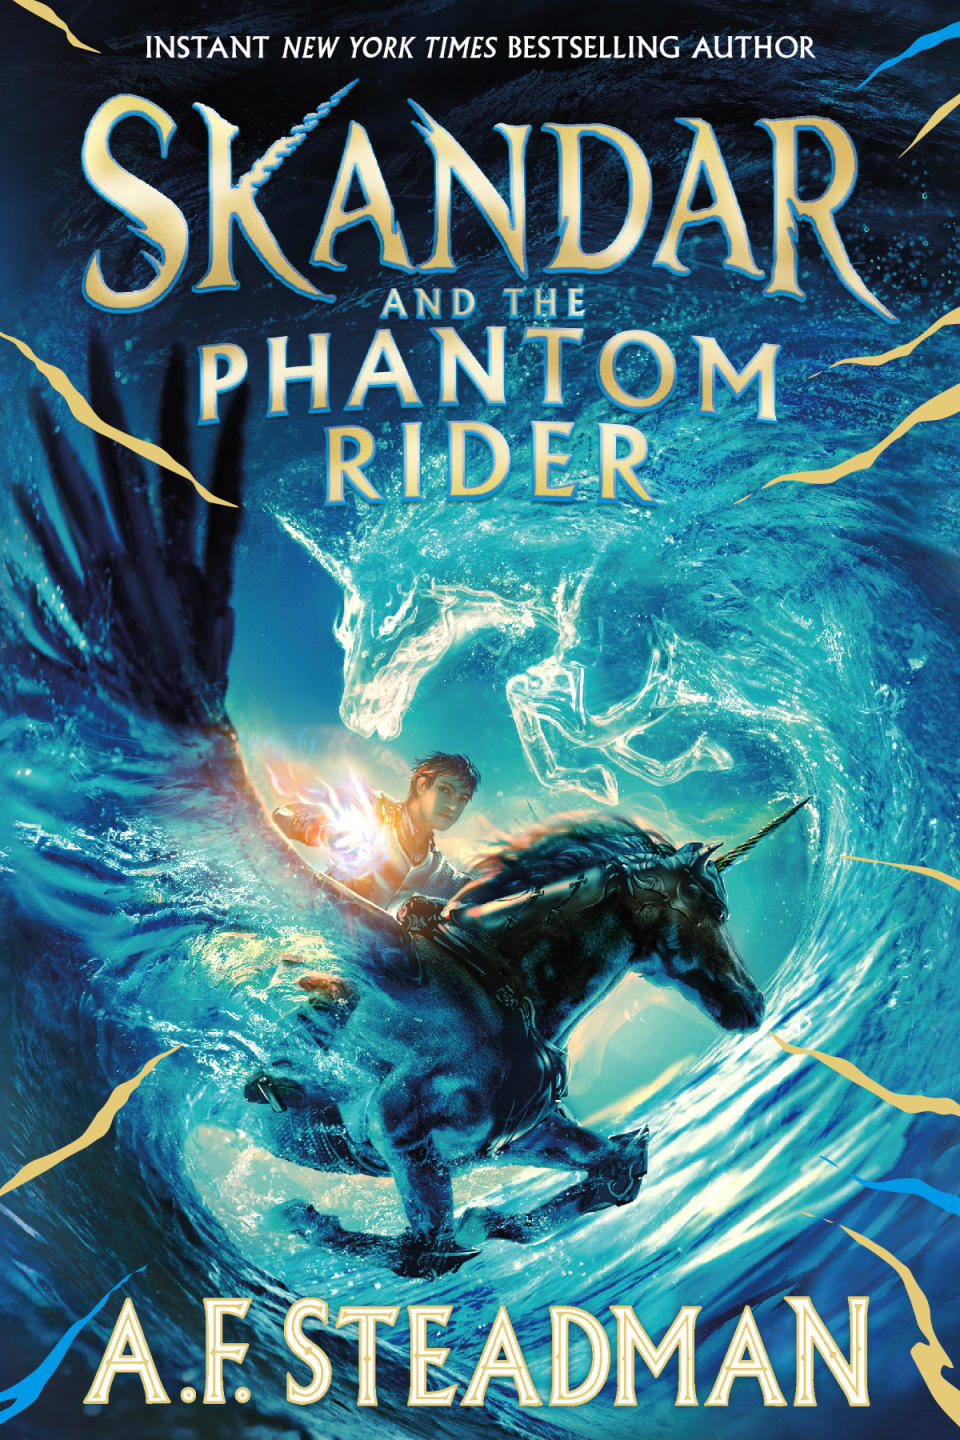 The cover for Skandar and the Phantom Rider shows the titular hero riding a unicorn through a wave